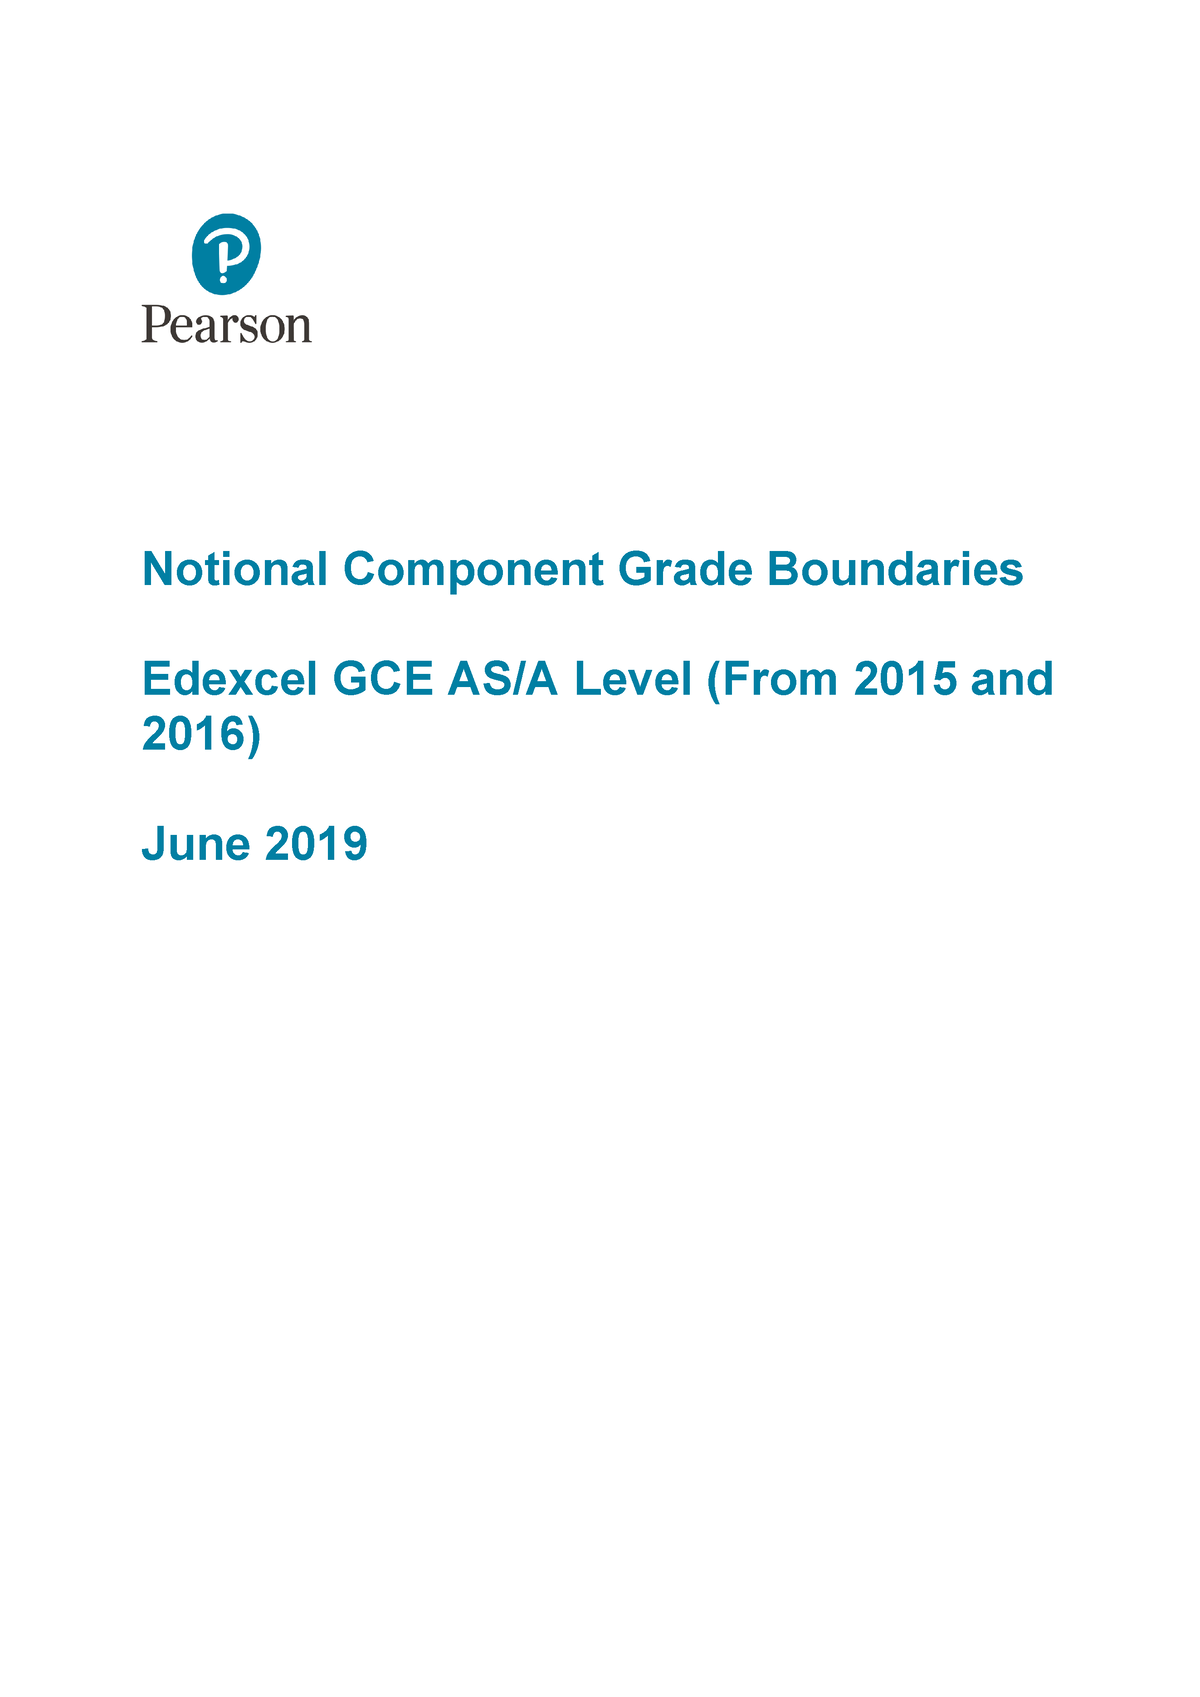 Edexcel IGCSE English as a Second Language Grade Boundary Max Mark